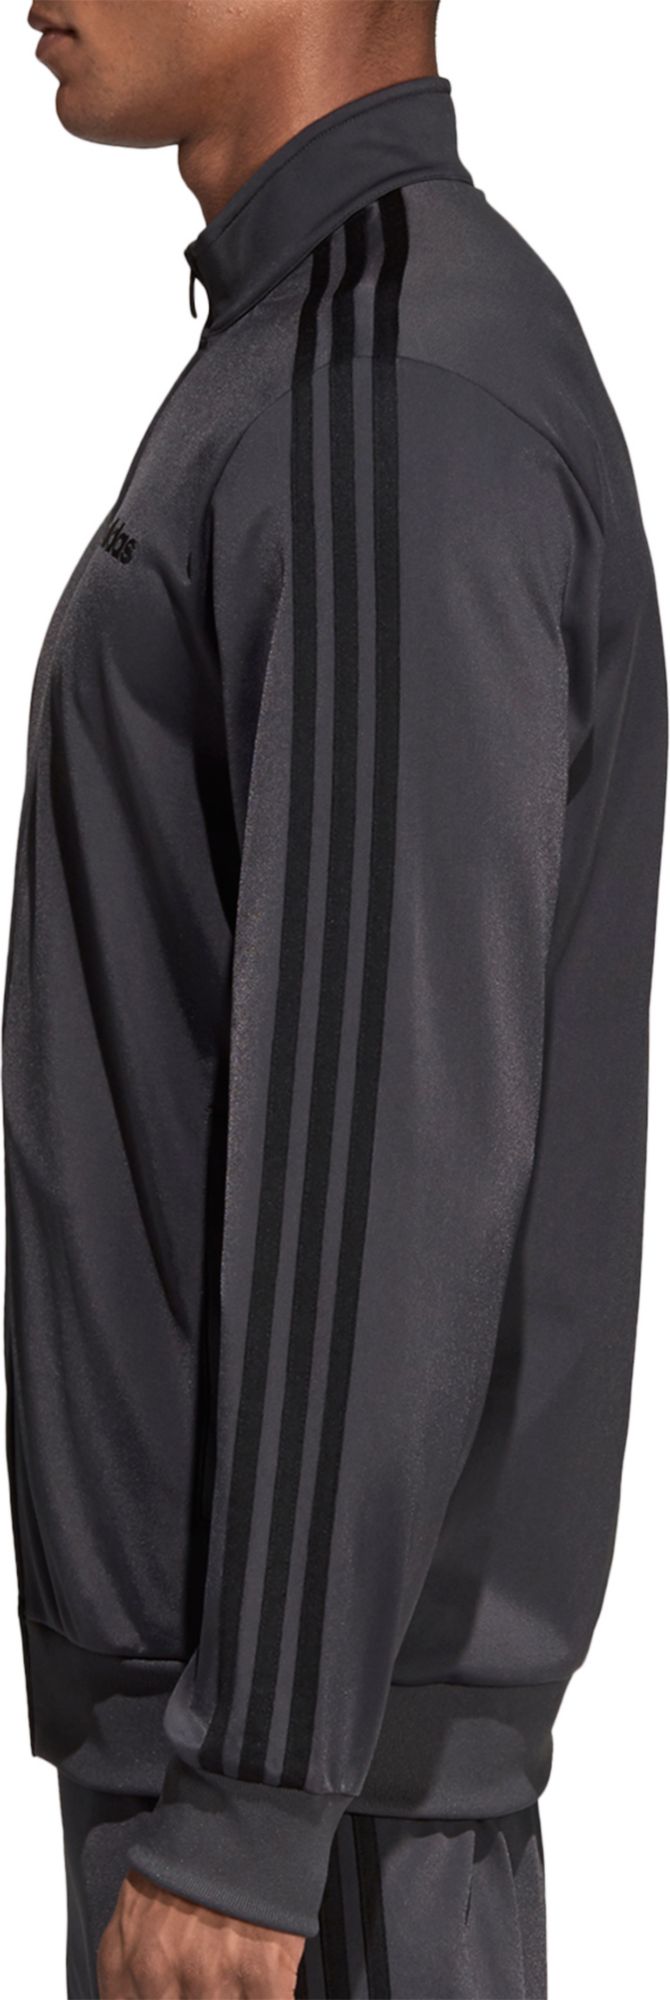 adidas black stripe jacket